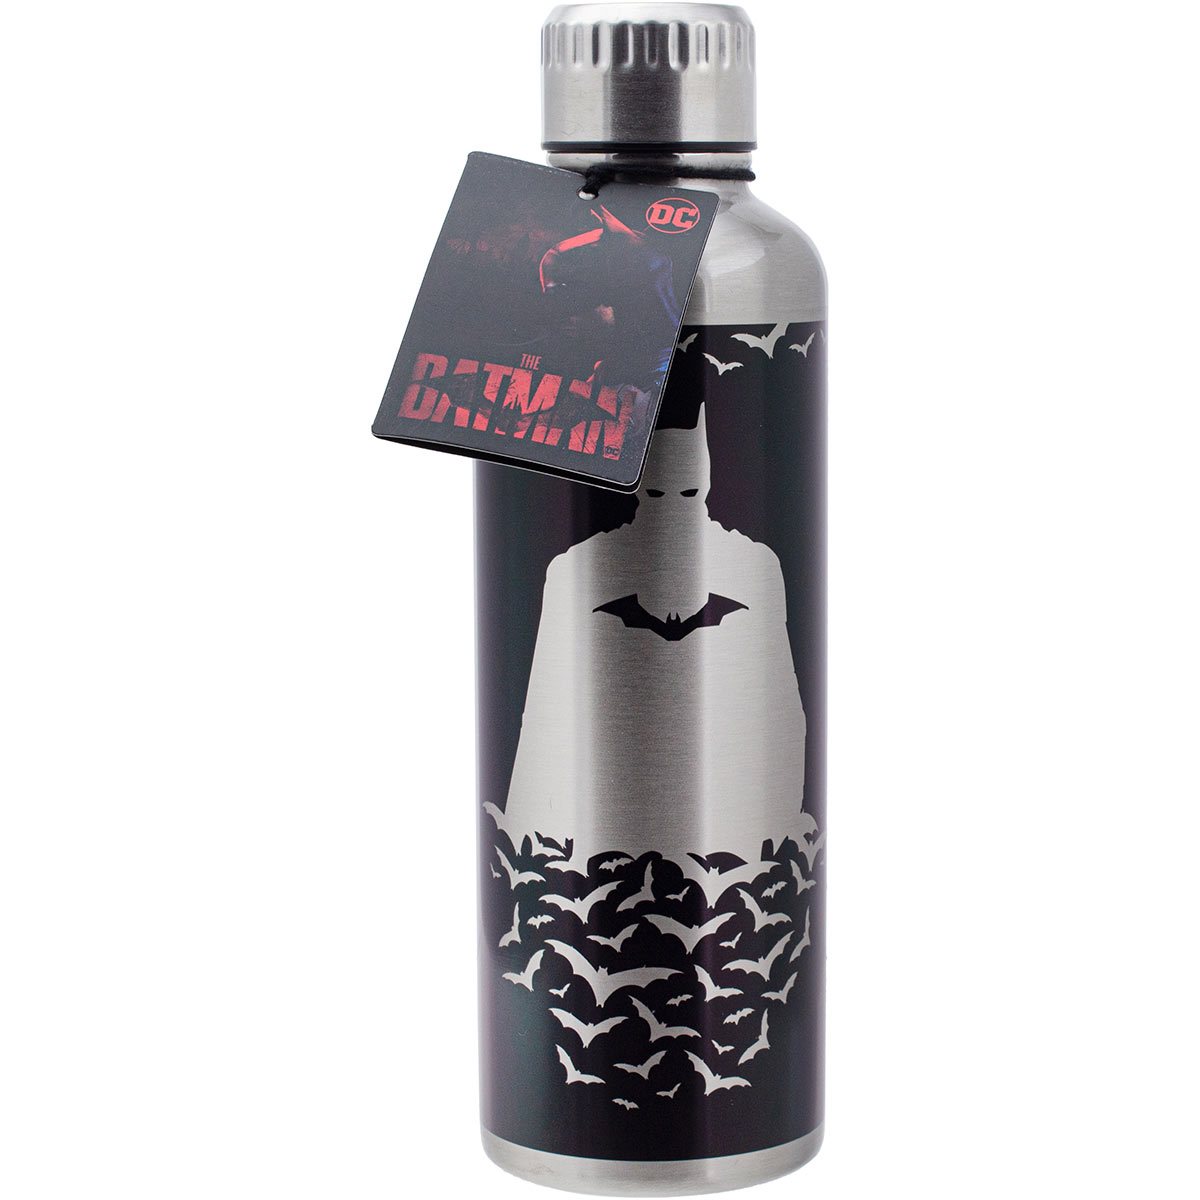 Wholesale Batman Water Bottle- 16oz SILVER/BLK